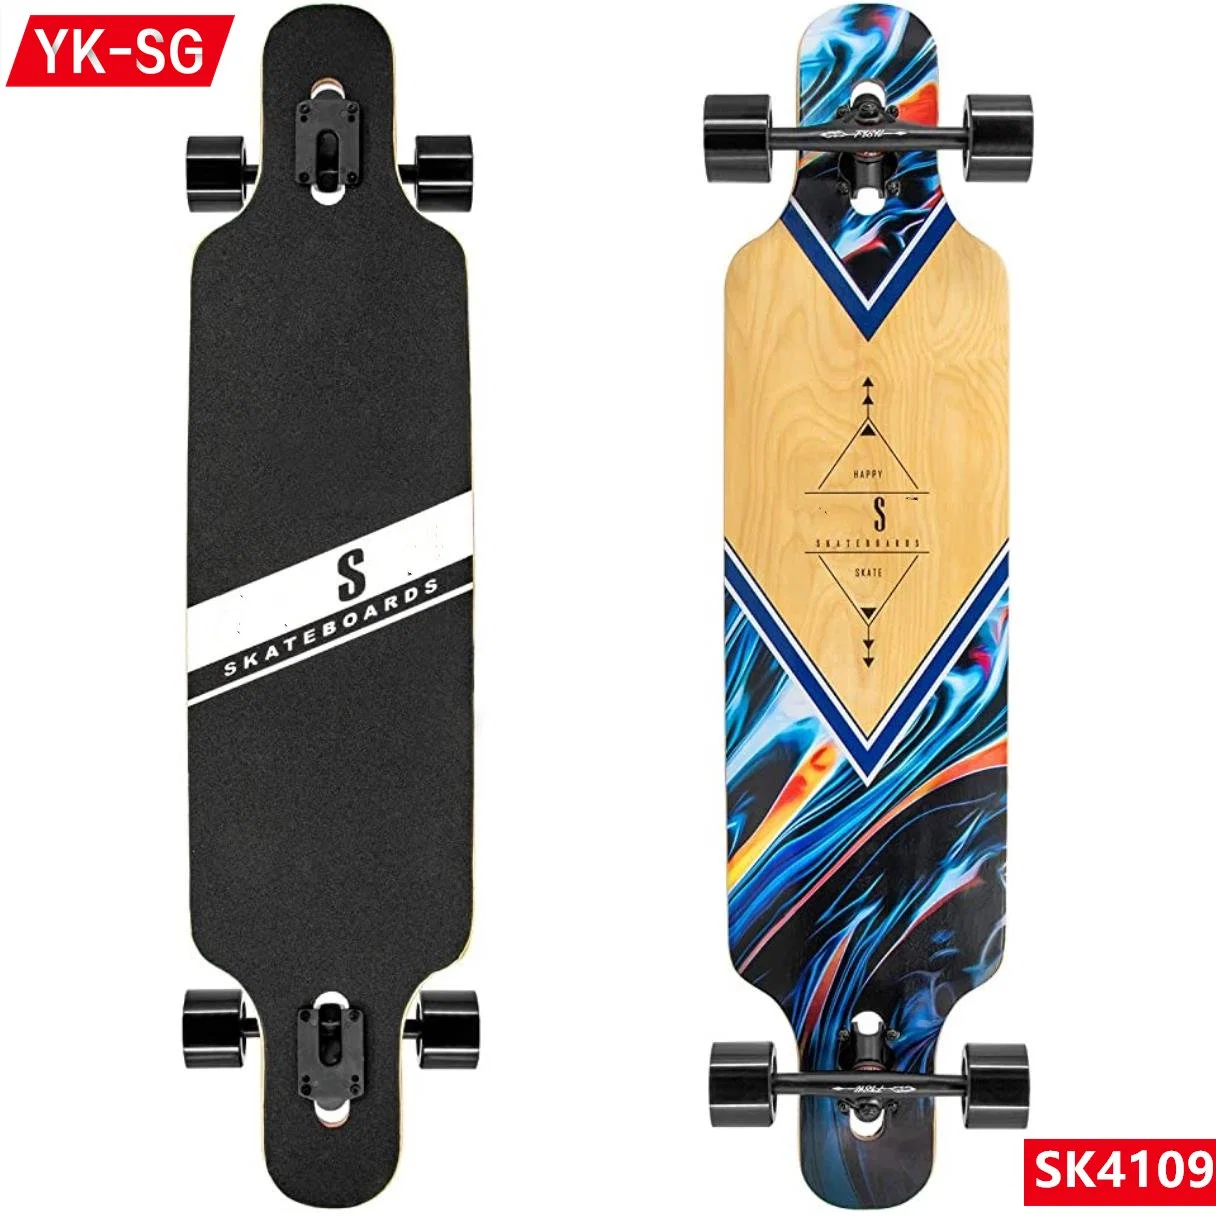 Longboard Skateboard 41inch 41*09 Inch Dancing Board Long Board Free Style Complete Cruiser Pintail